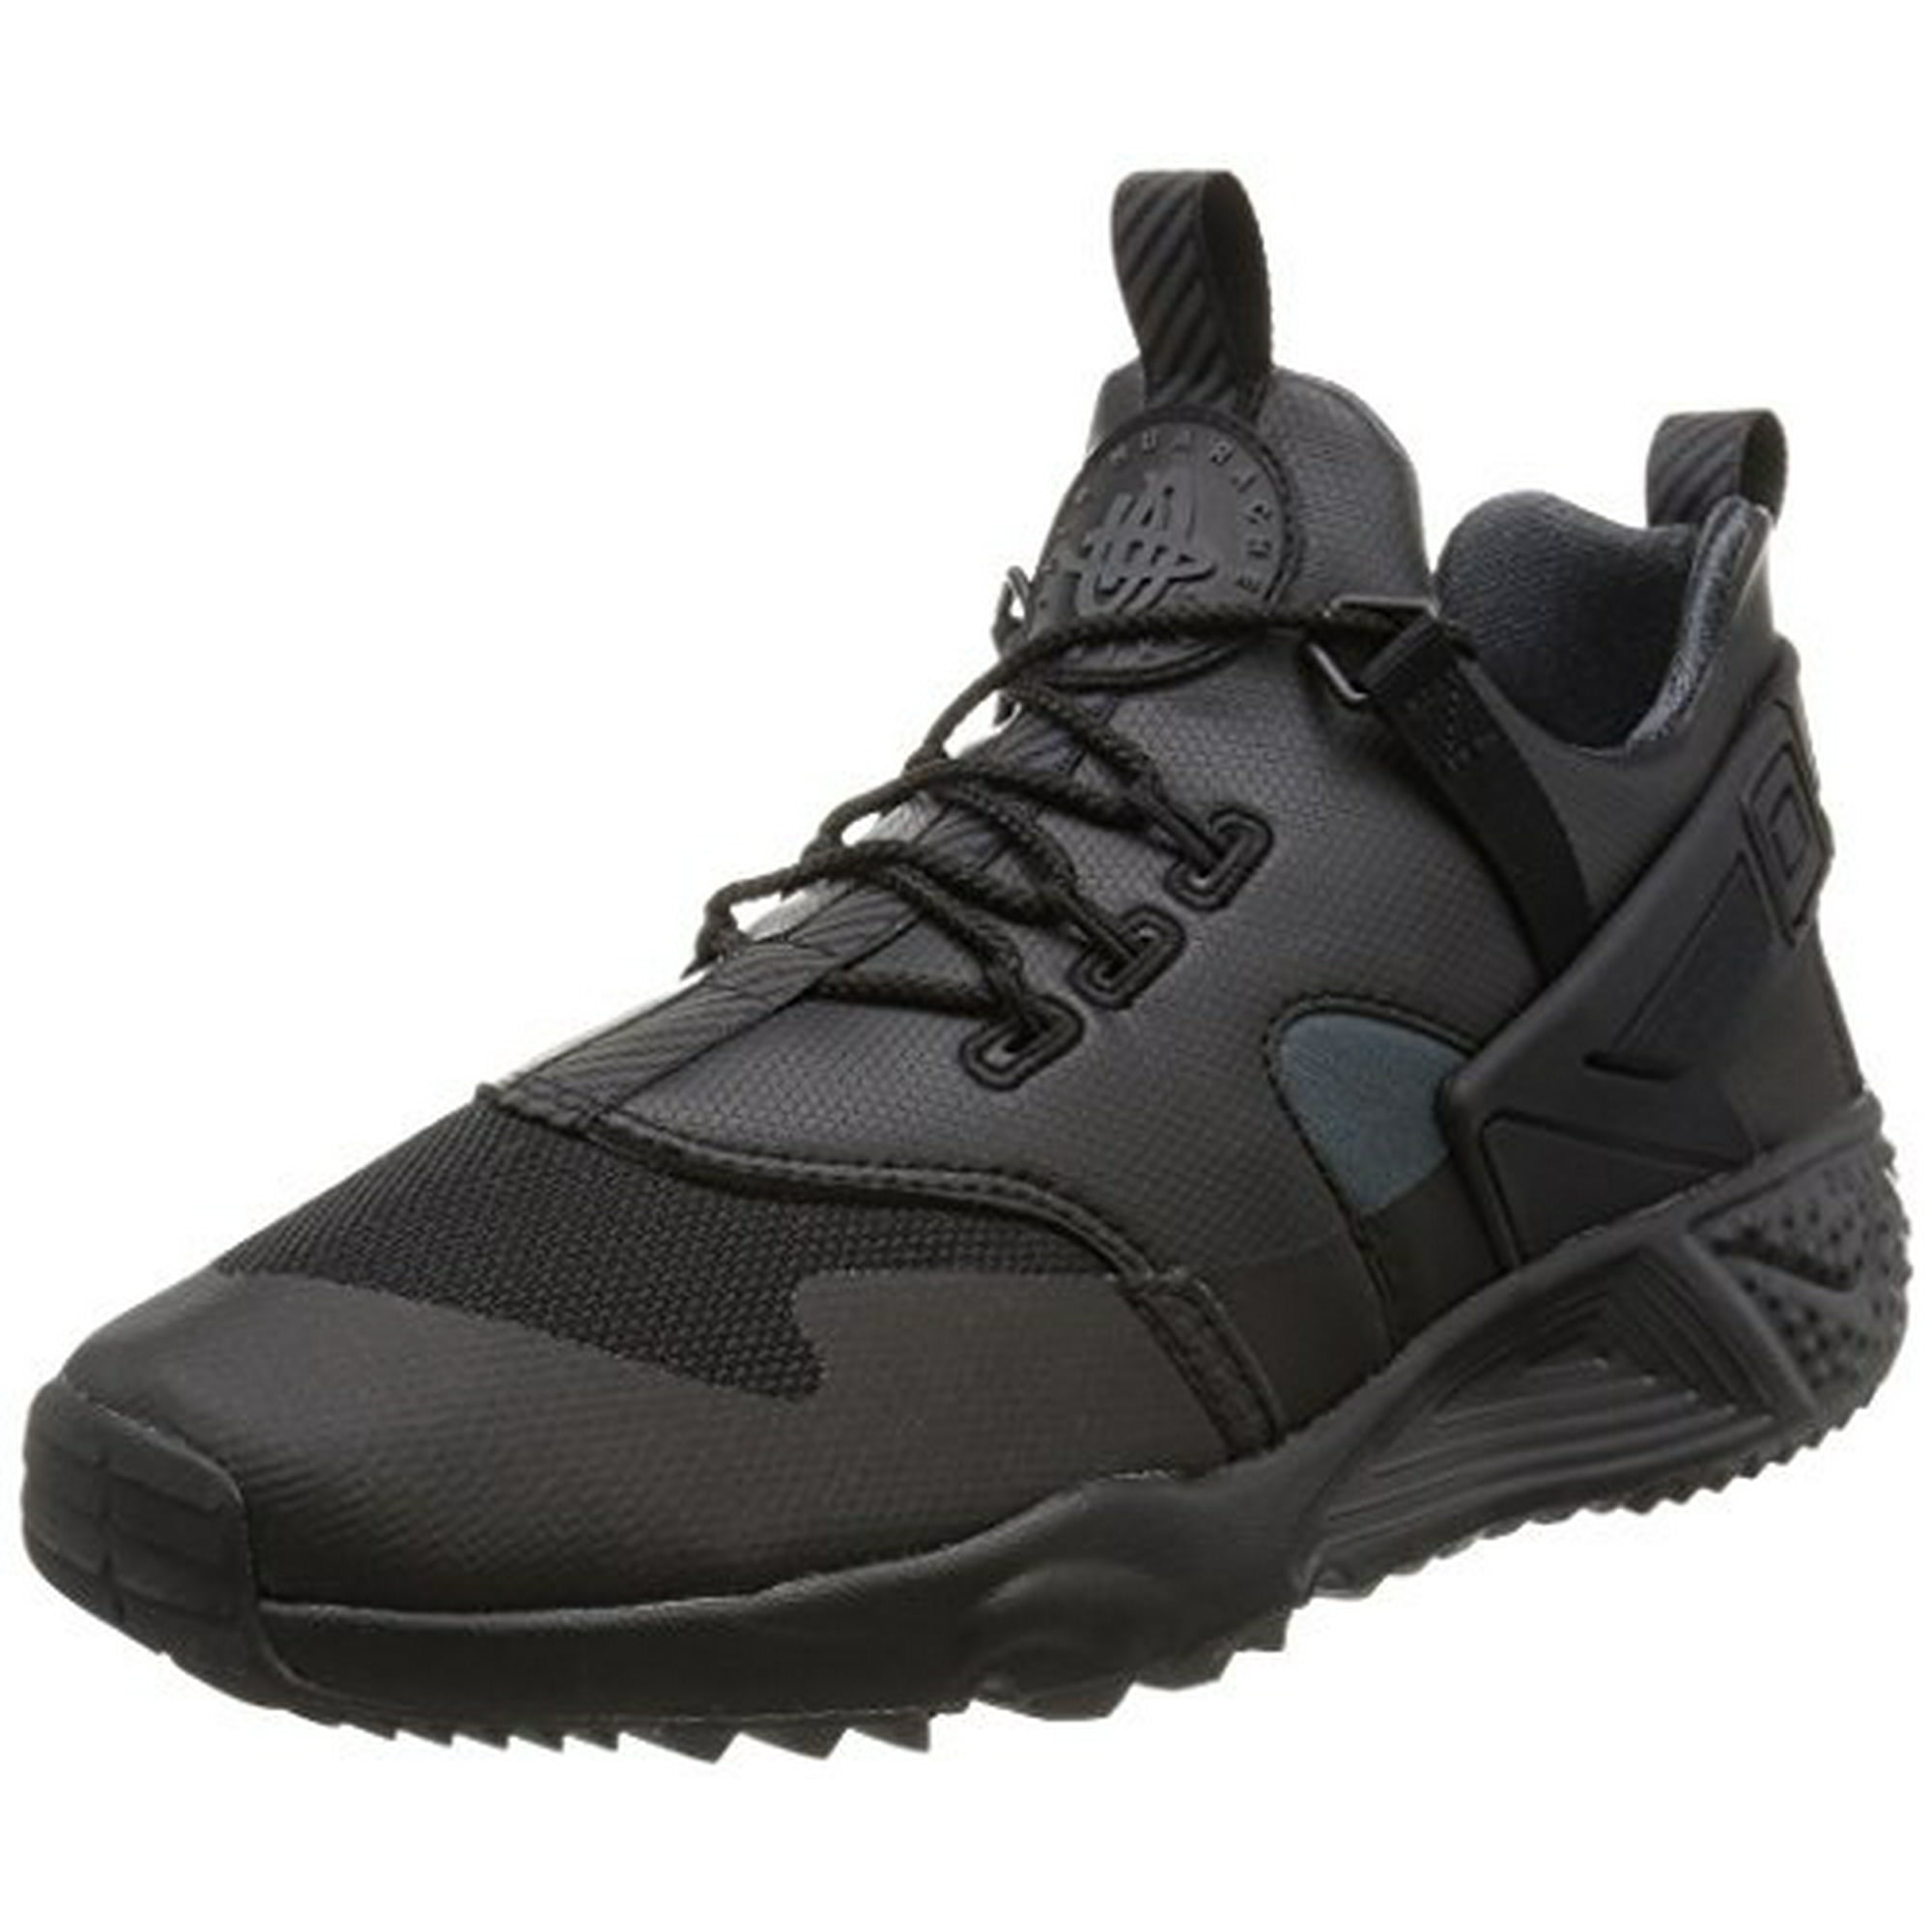 NIKE Huarache Utility Premium Sneaker Black 806979 | Walmart Canada